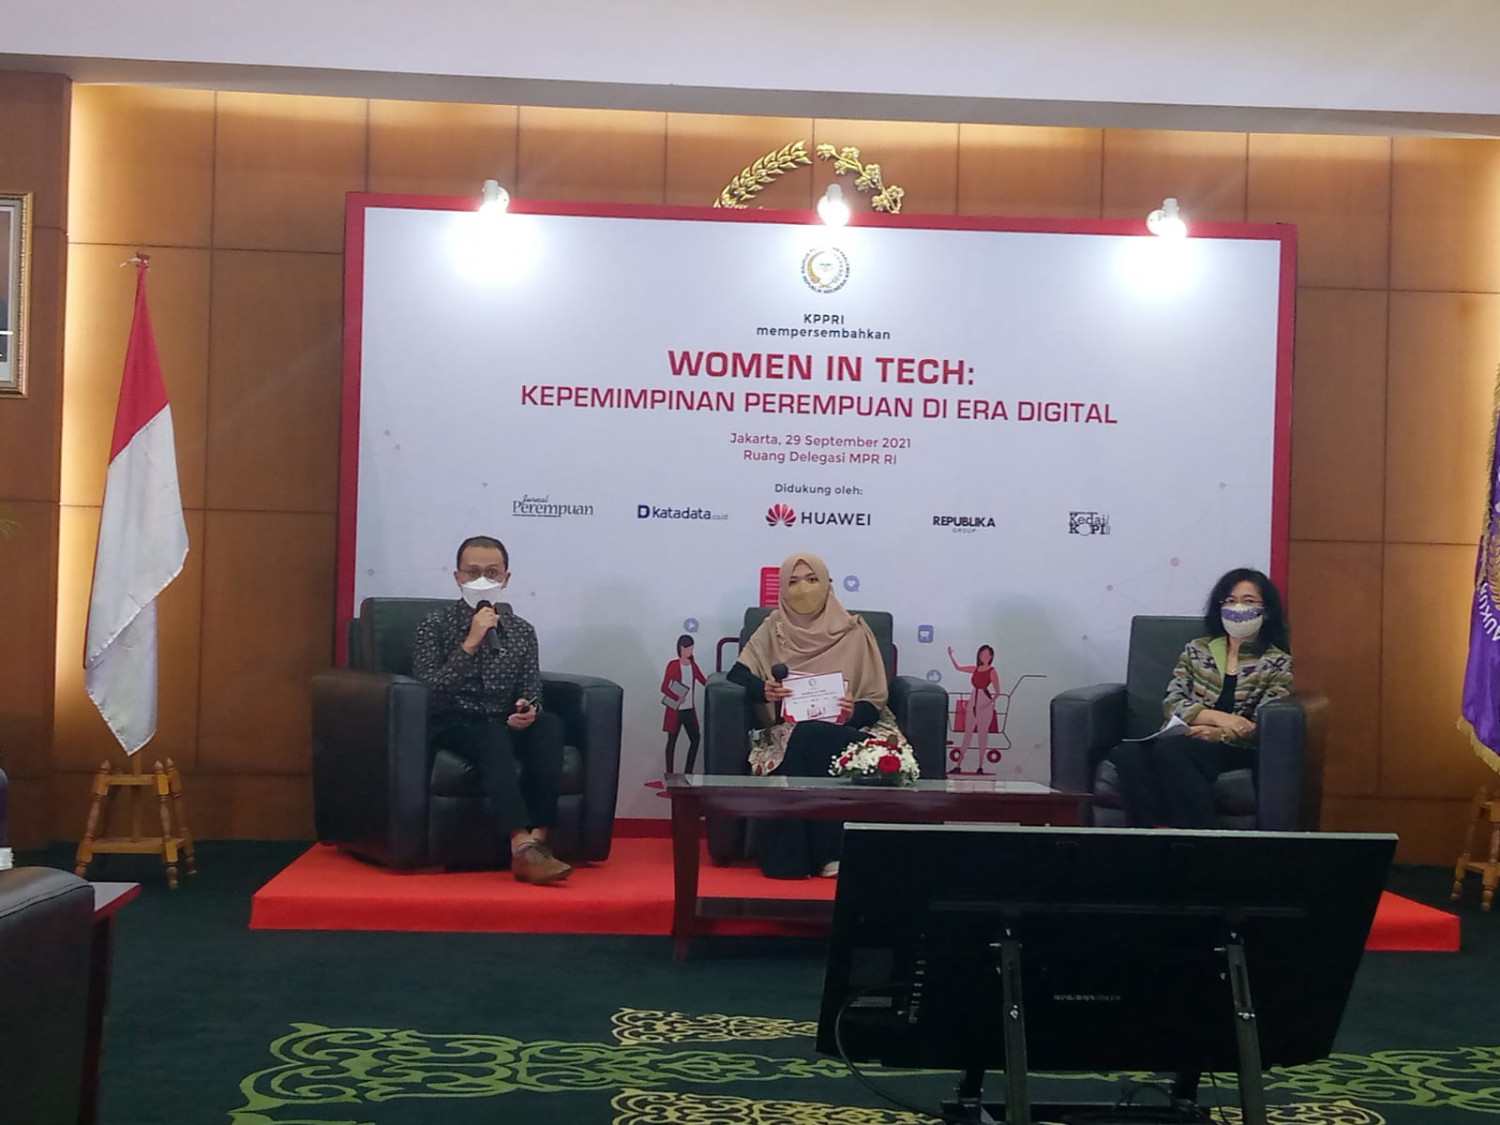 Women in Tech: Kepemimpinan Perempuan di Era Digital